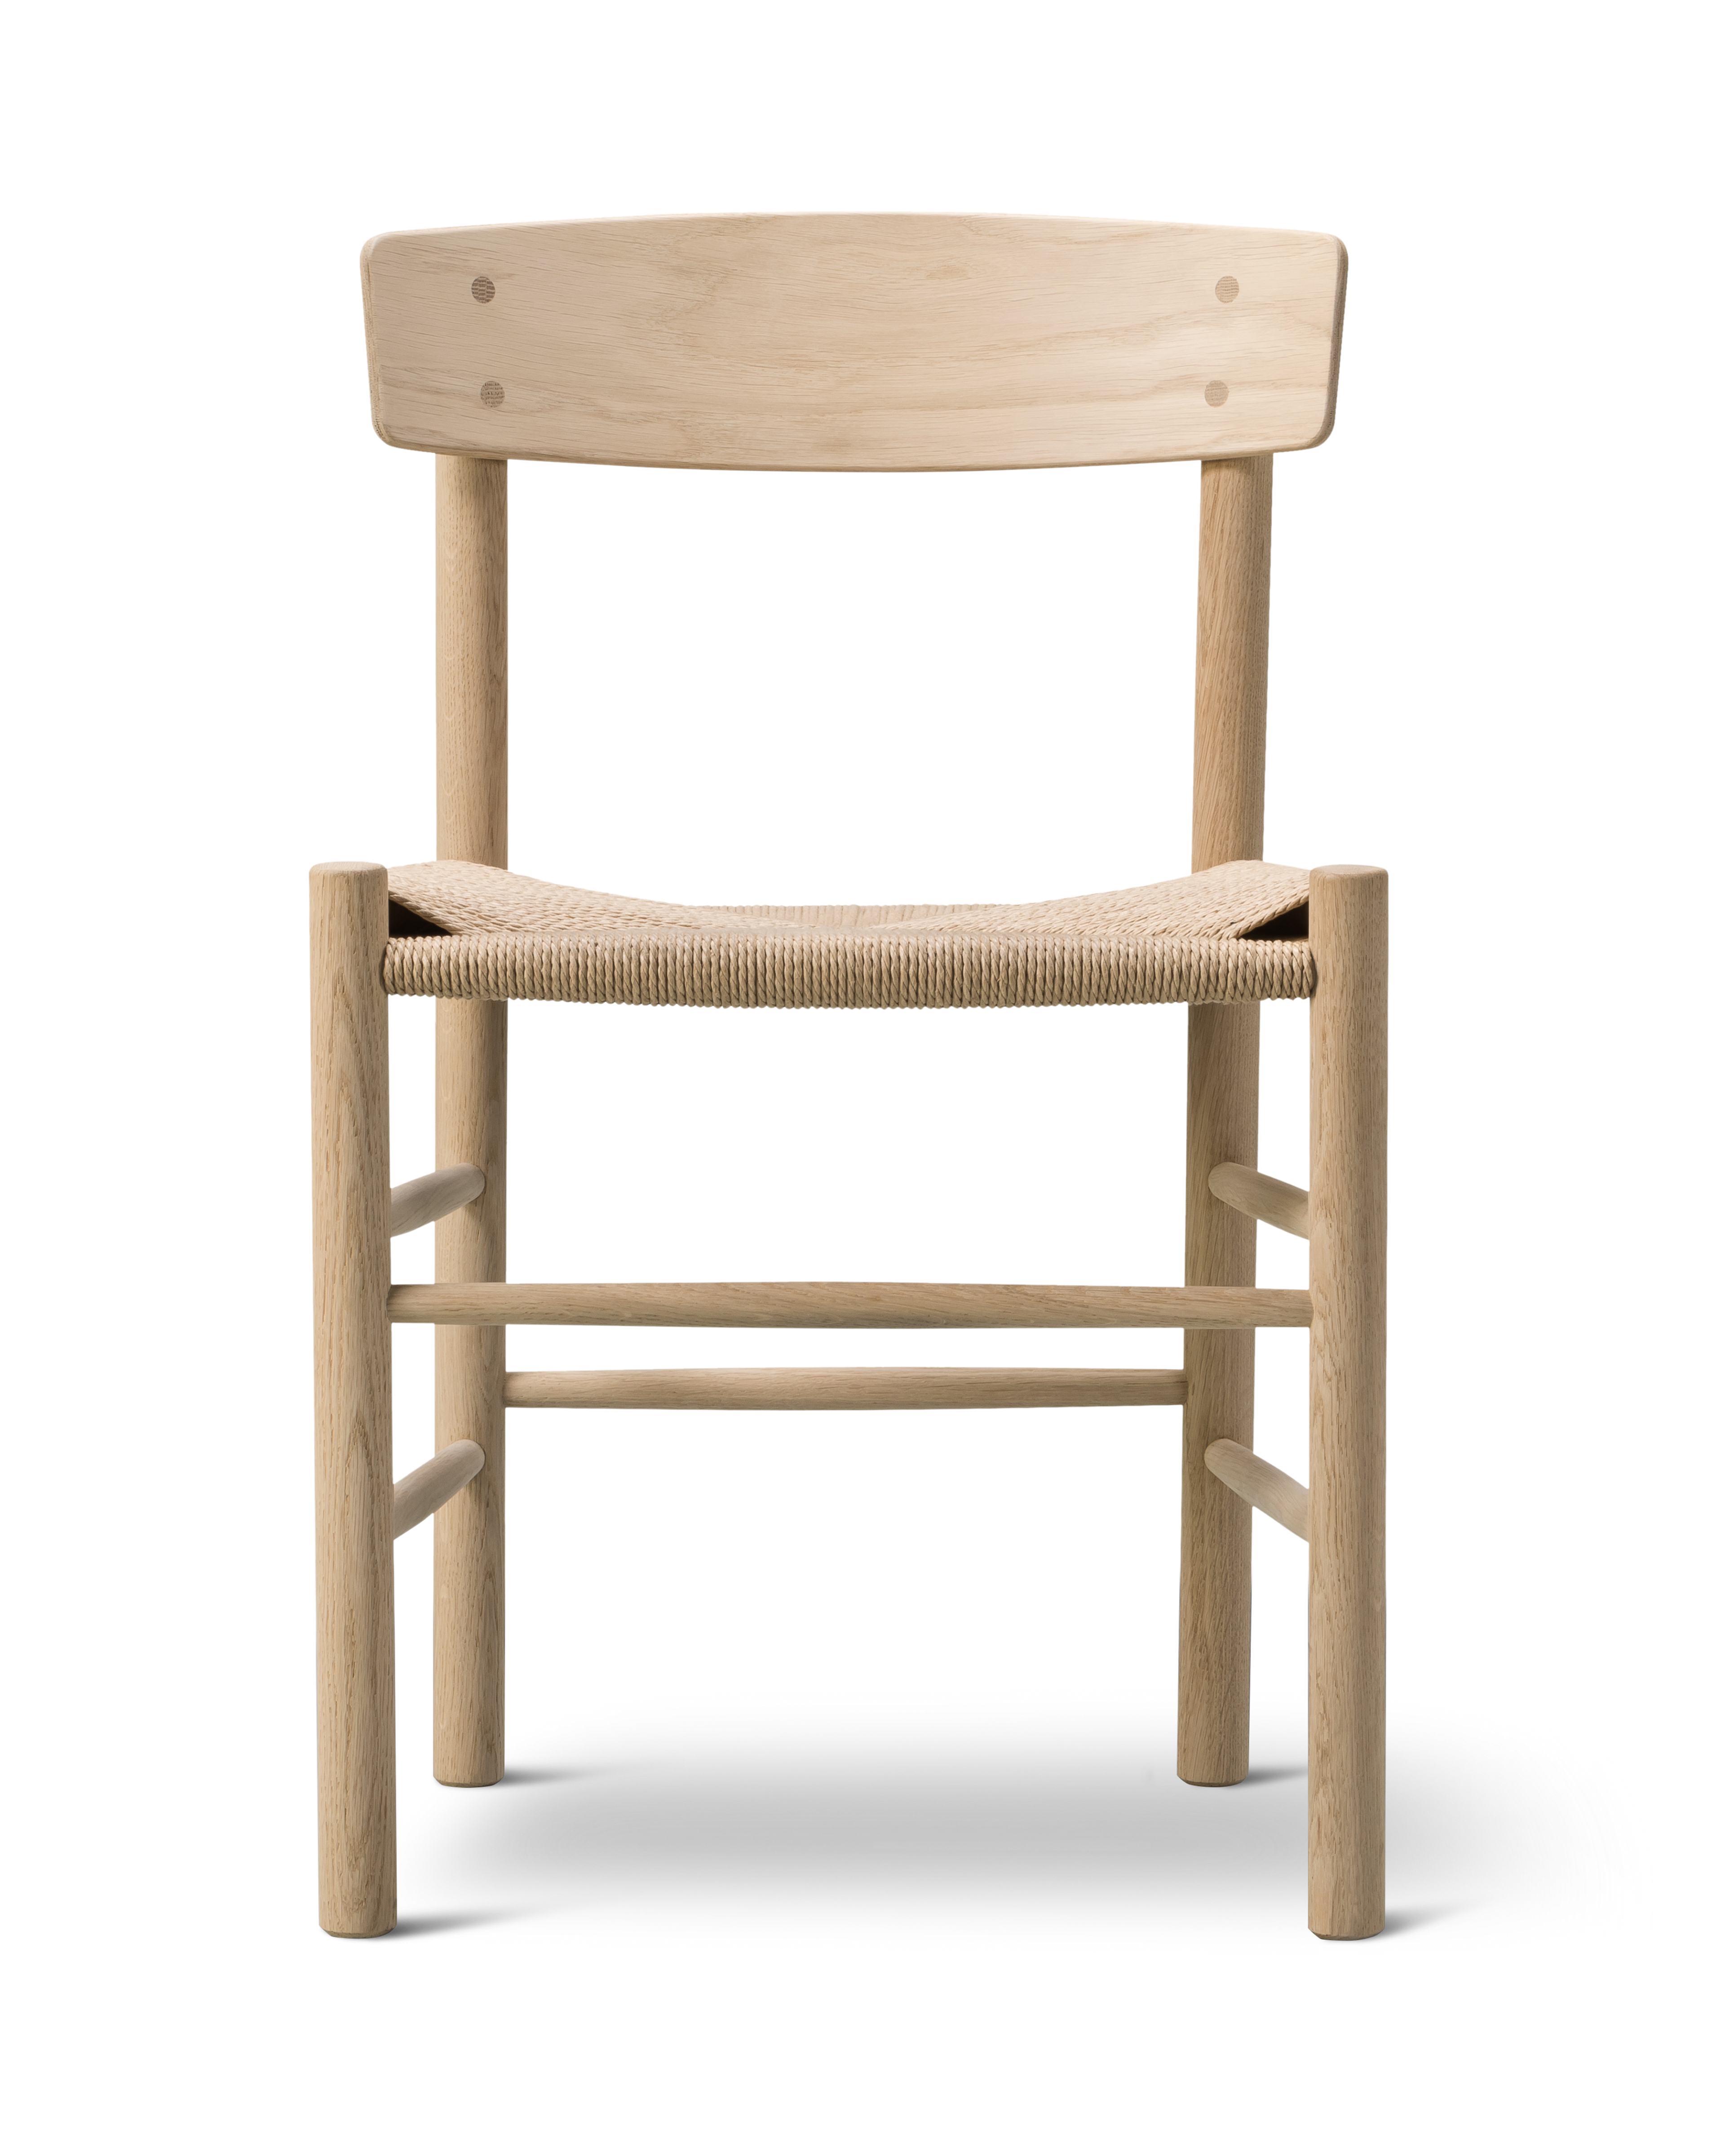 Mogensen J39 Chair - Soaped oak / Natural papercord